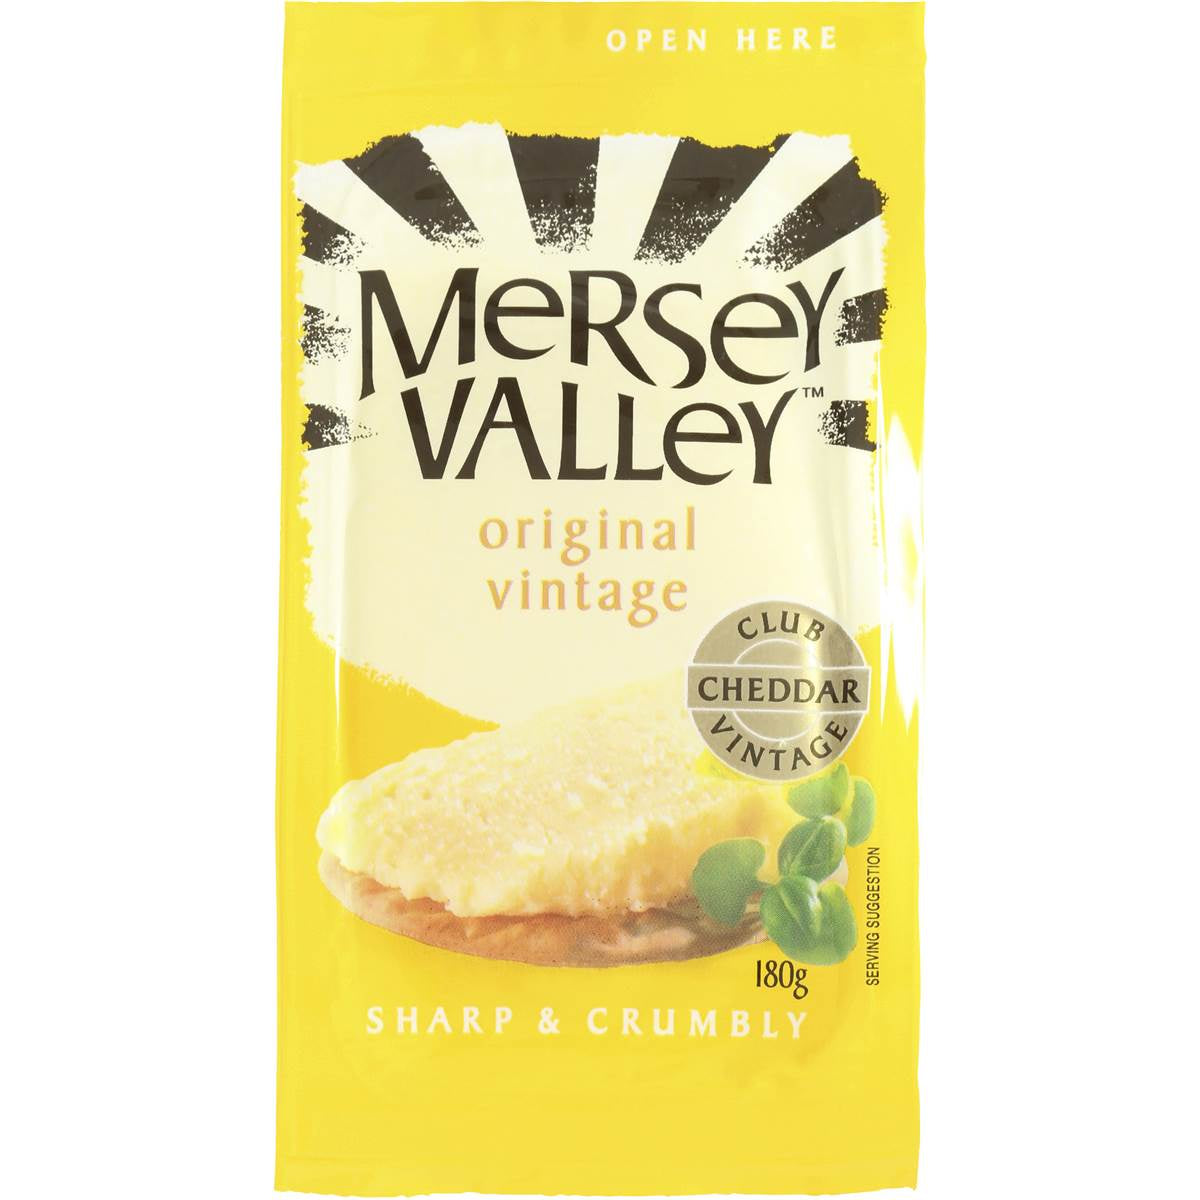 Mersey Valley Club Vintage Original Cheddar Cheese 180g